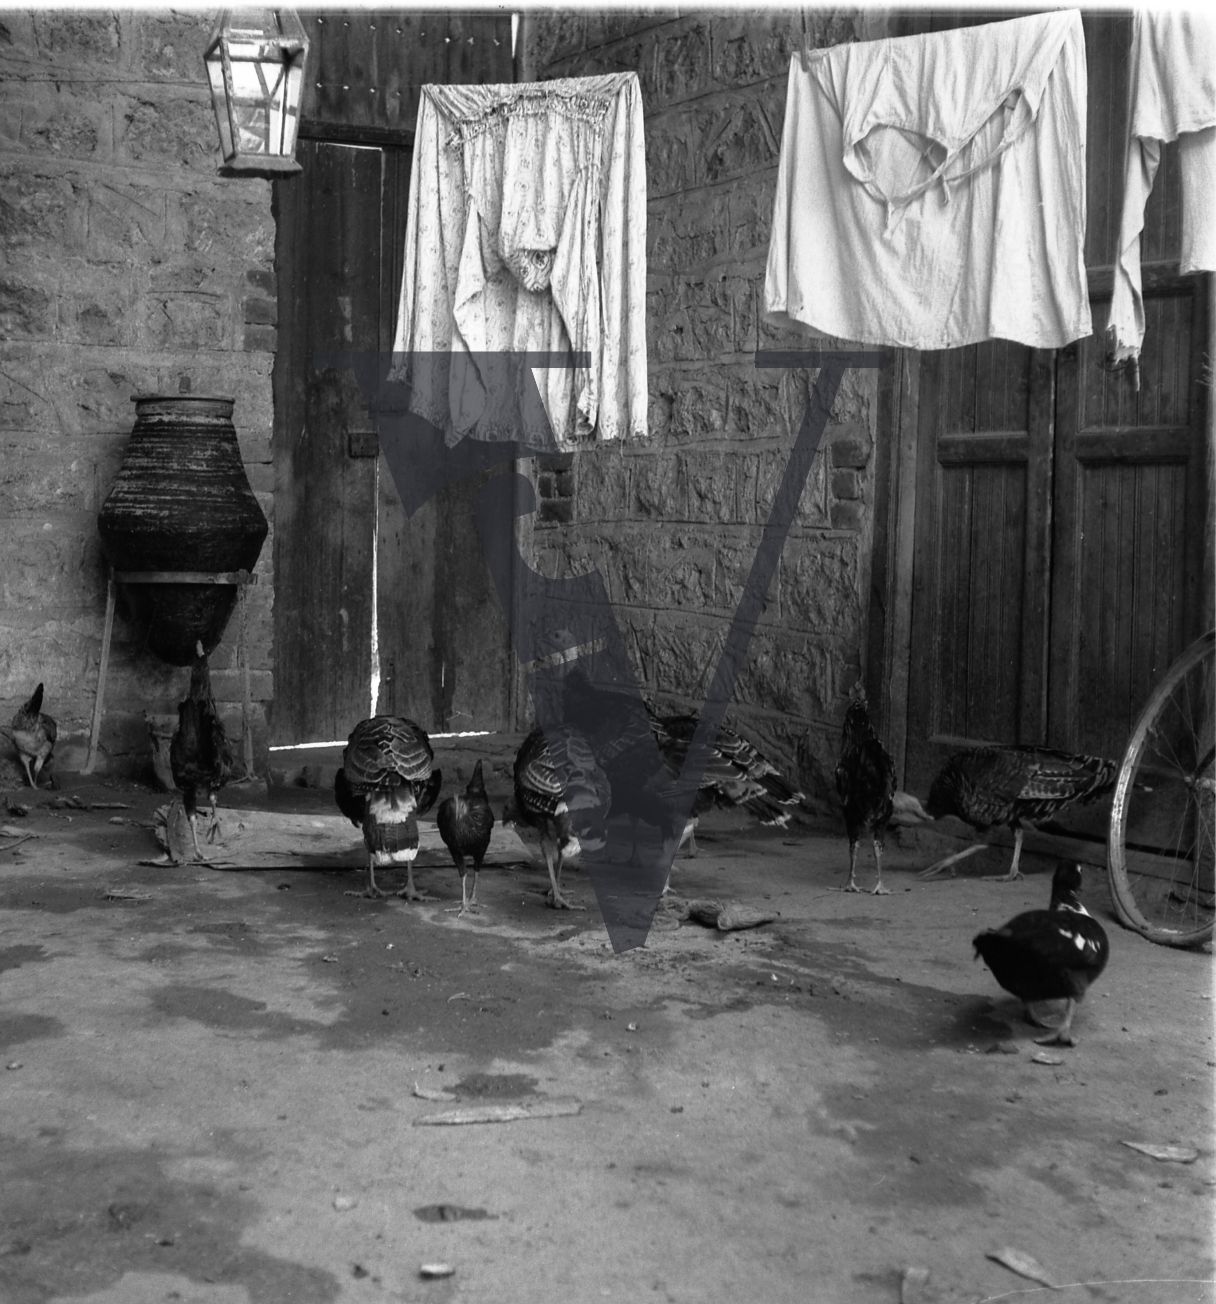 Harrania, Egypt, birds in courtyard while washing dries.